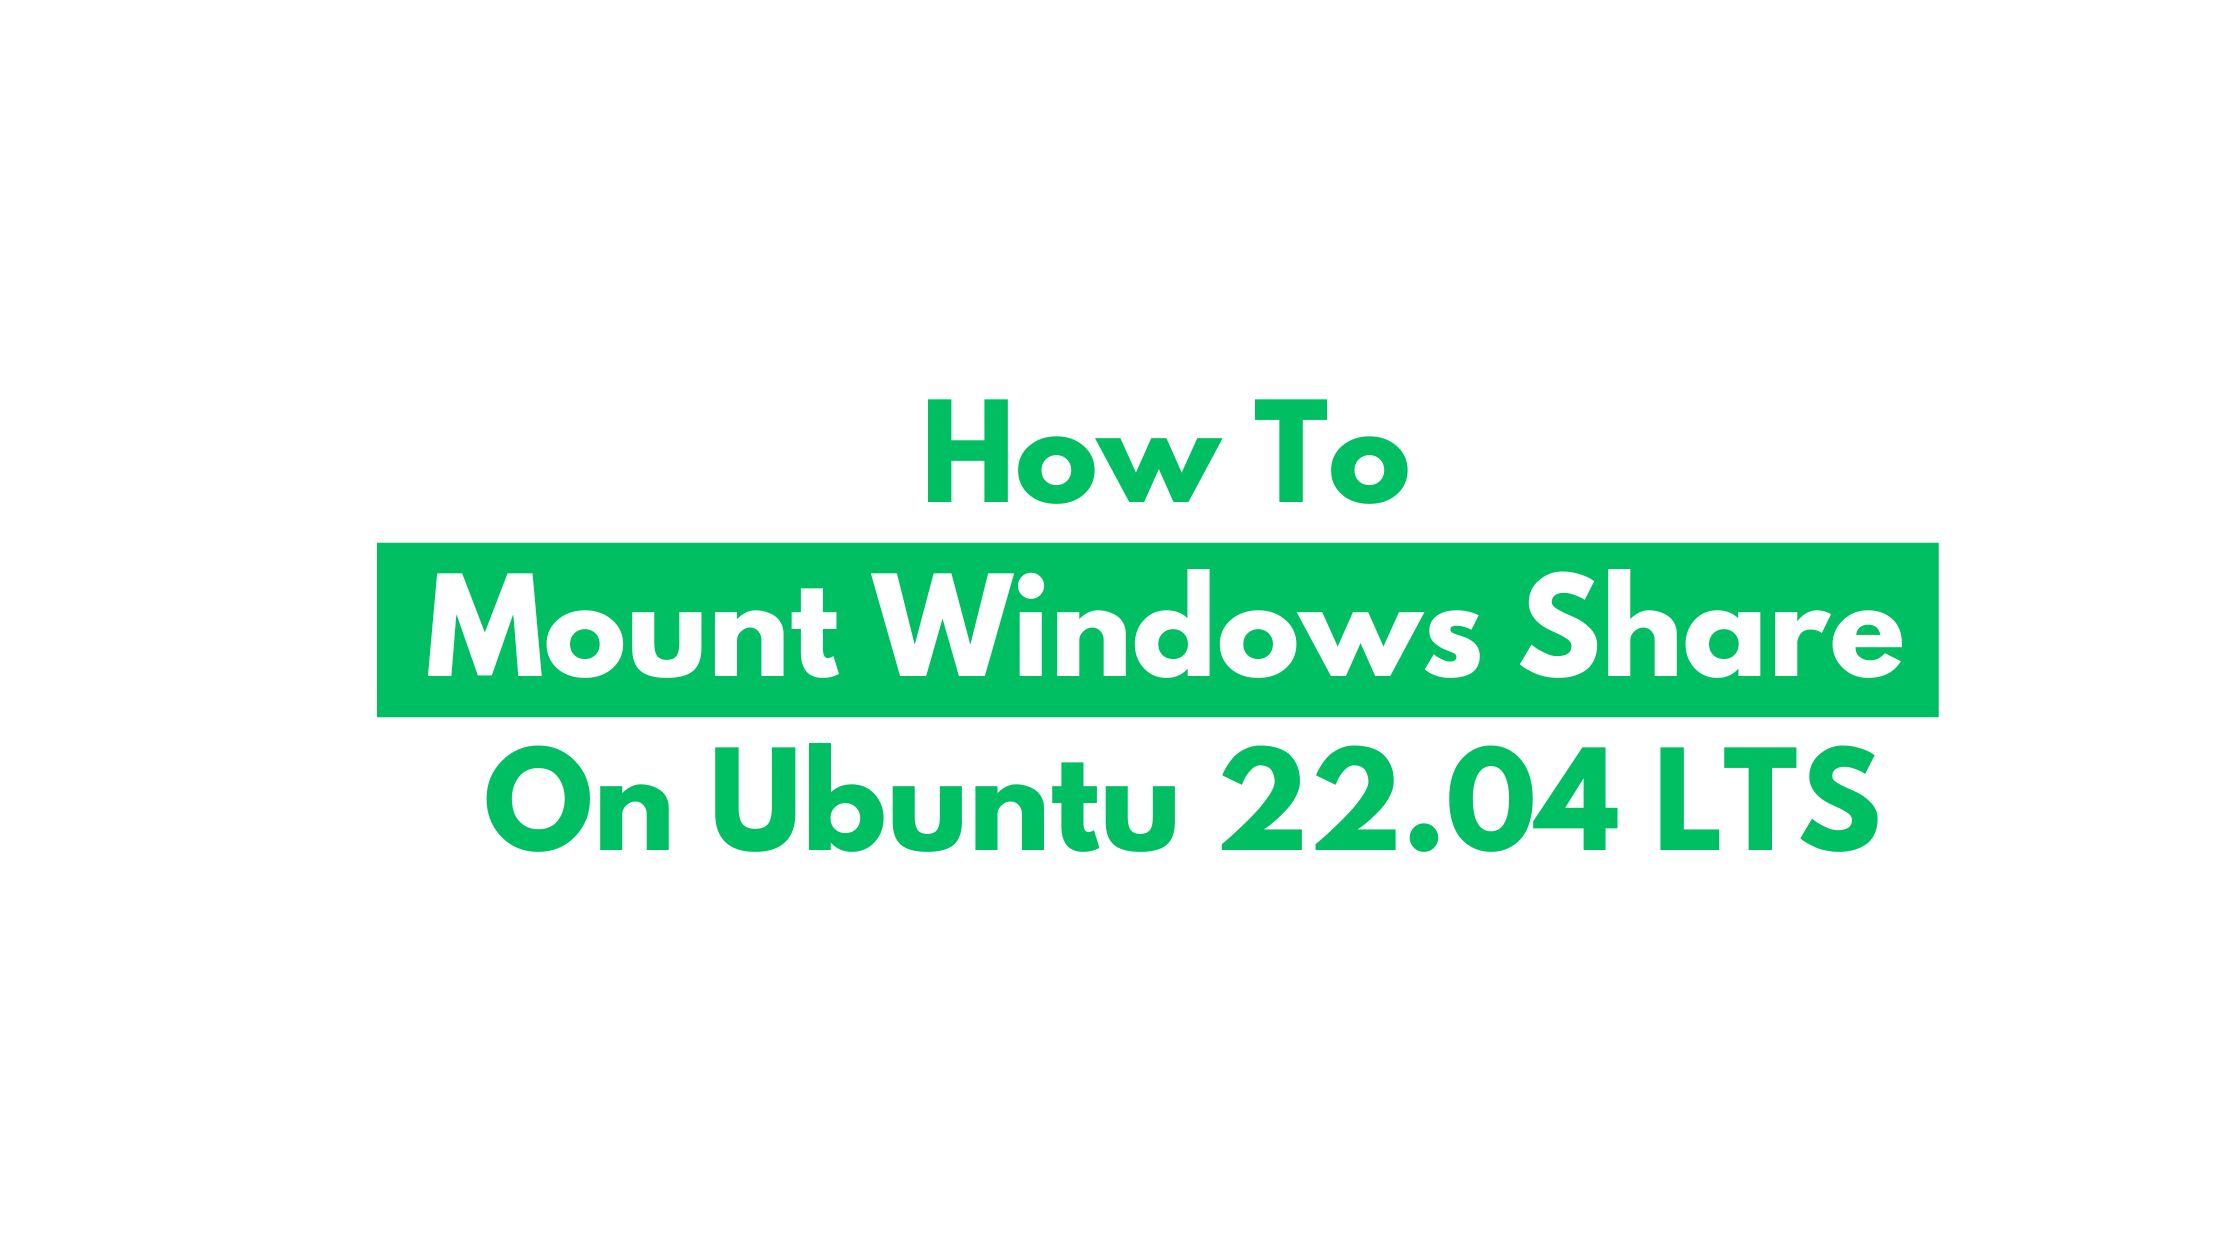 How To Mount Windows Share On Ubuntu 22.04 LTS